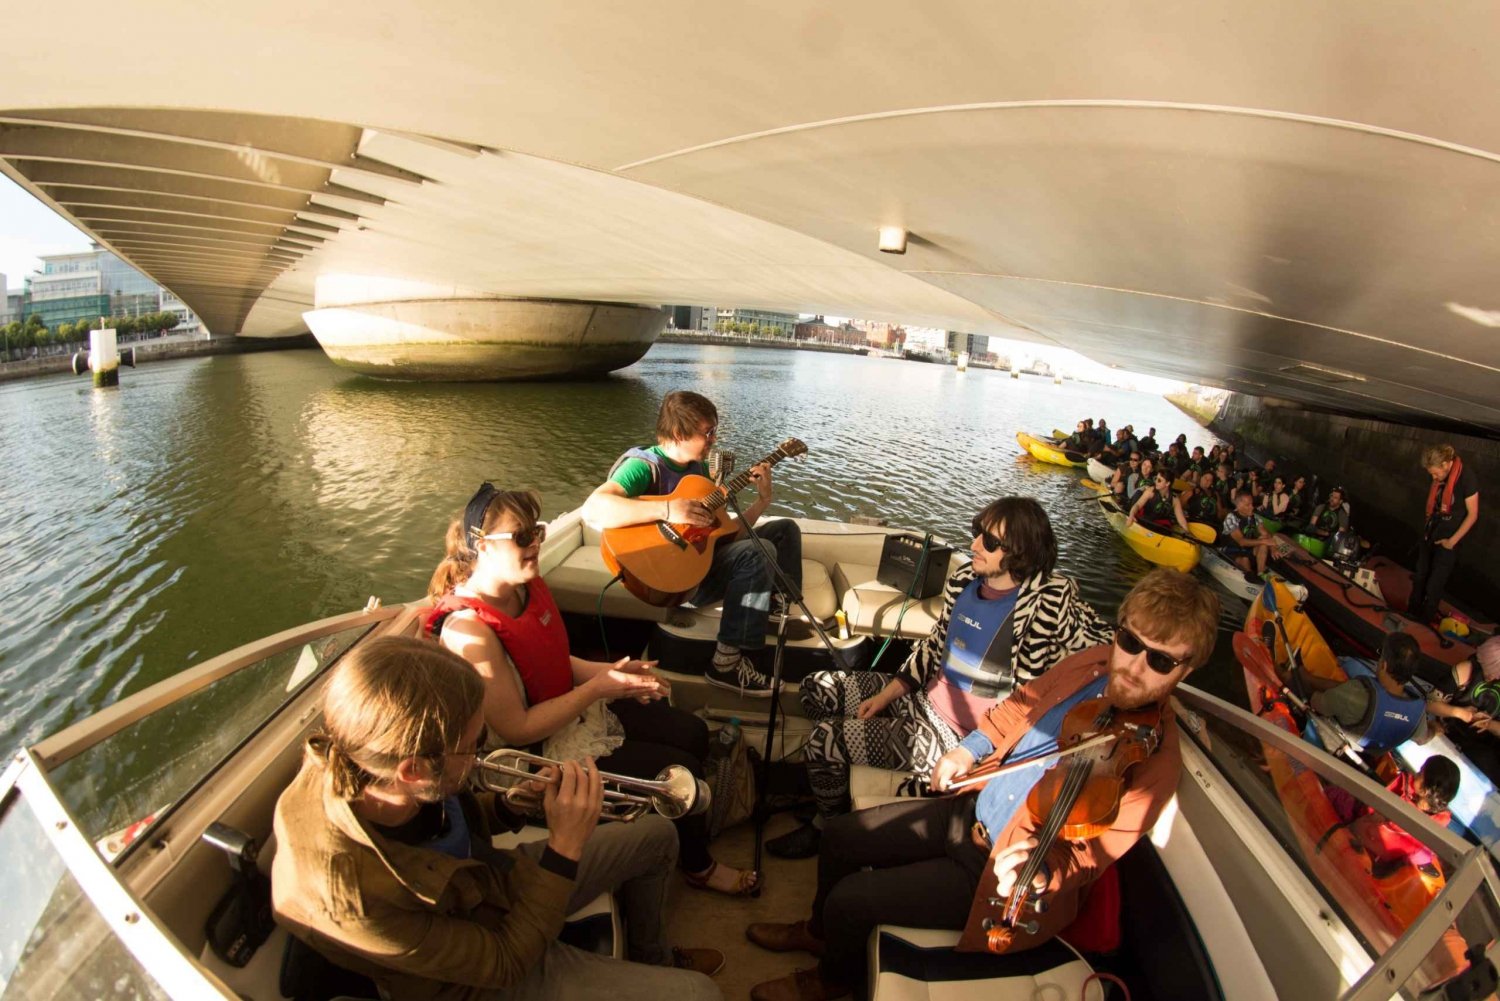 Dublin: Music Under the Bridges Kayaking Tour